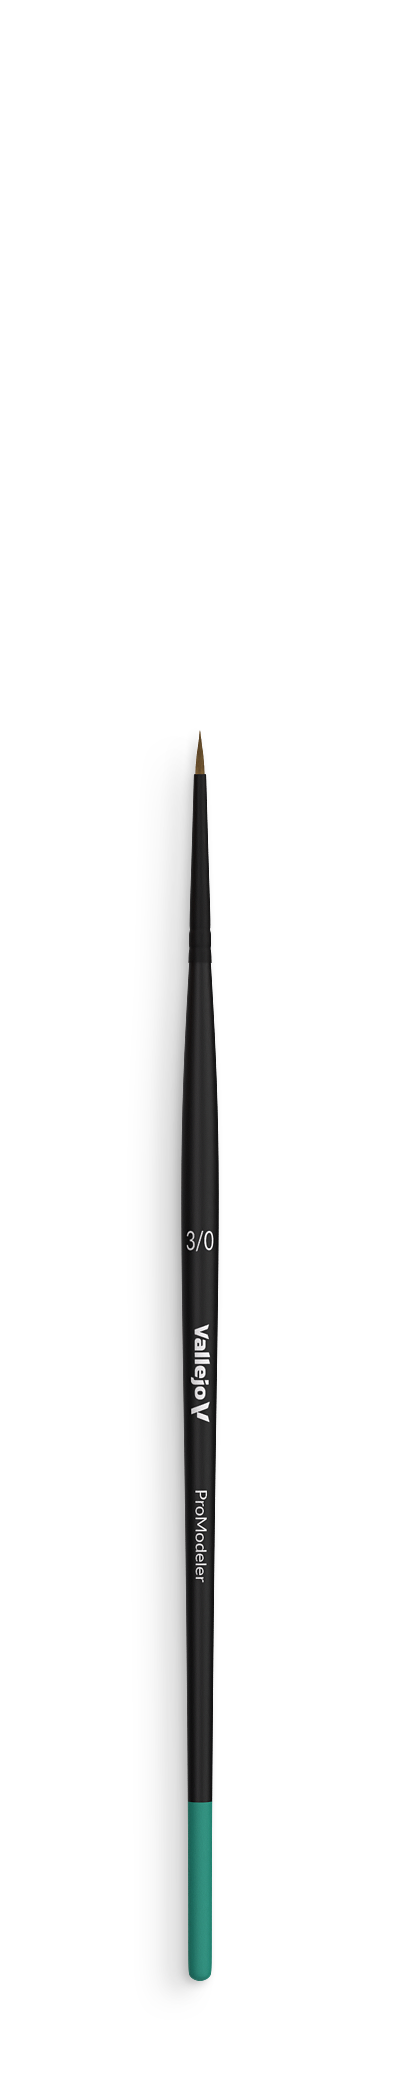 B01030 - Pro Modeler - NATURAL HAIR - ROUND BRUSH NO. 3/0 - Vallejo Pro Modeler